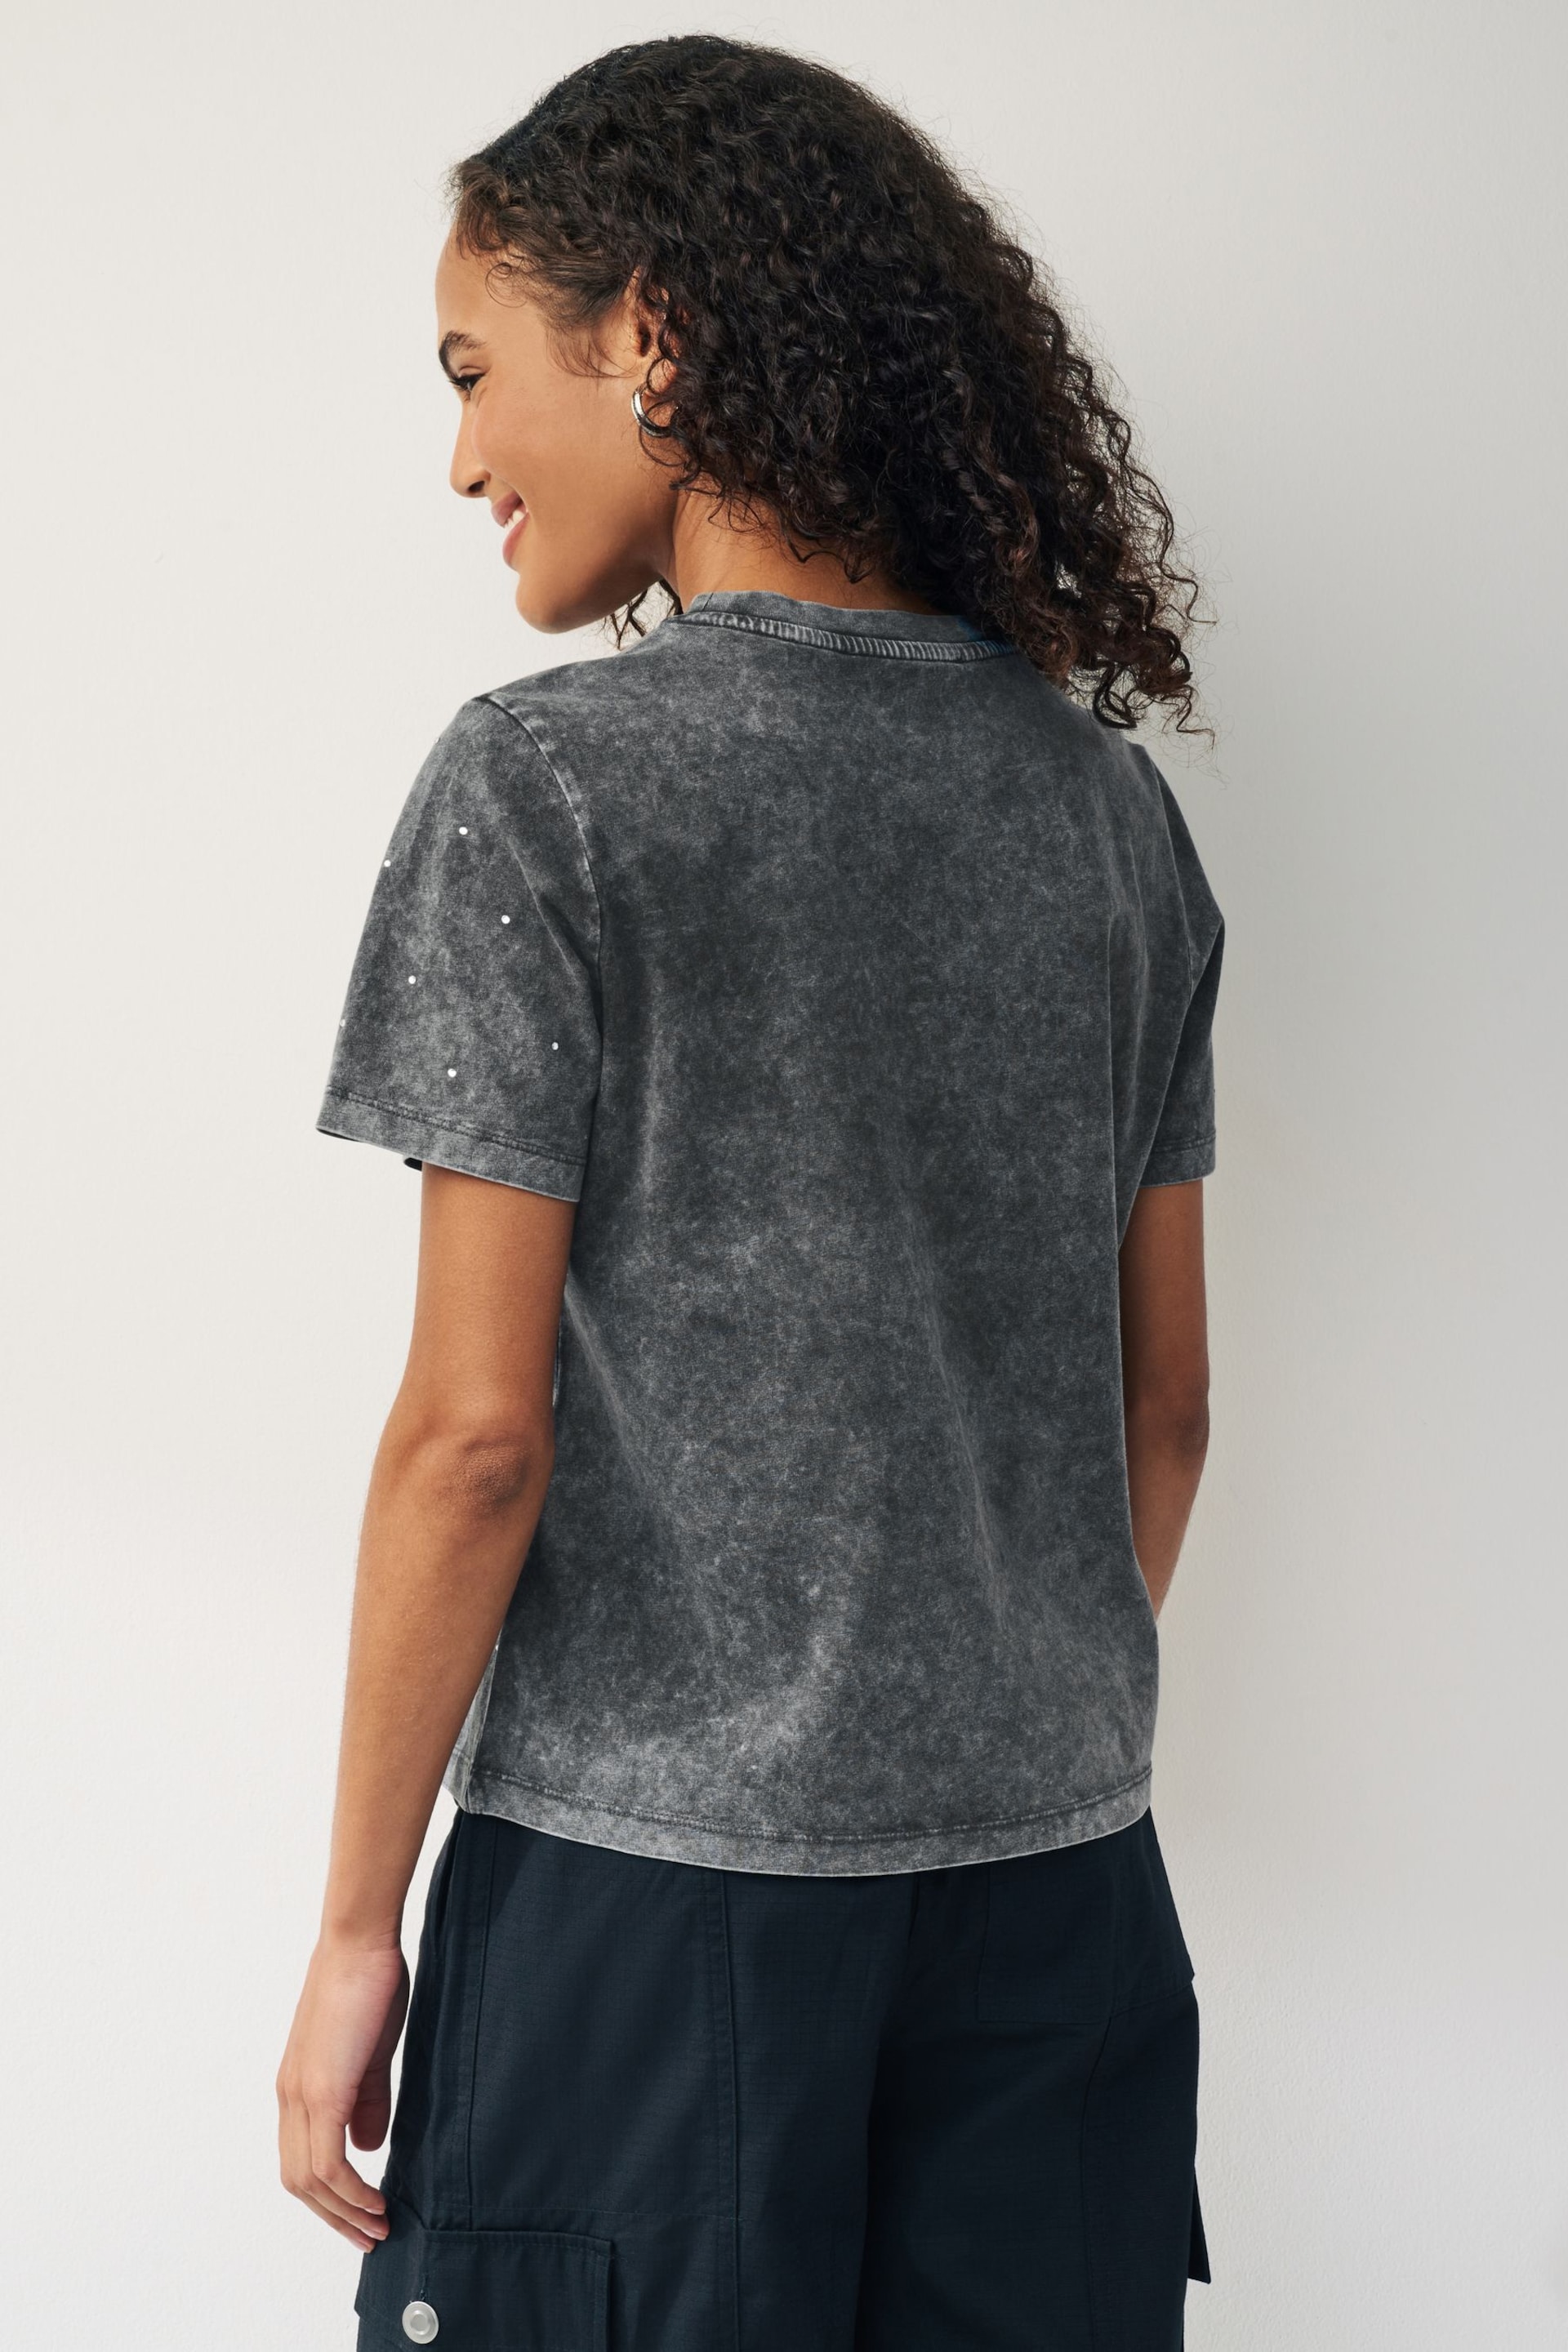 Washed Charcoal Grey Short Sleeve Sparkle Embellished T-Shirt - Image 3 of 6